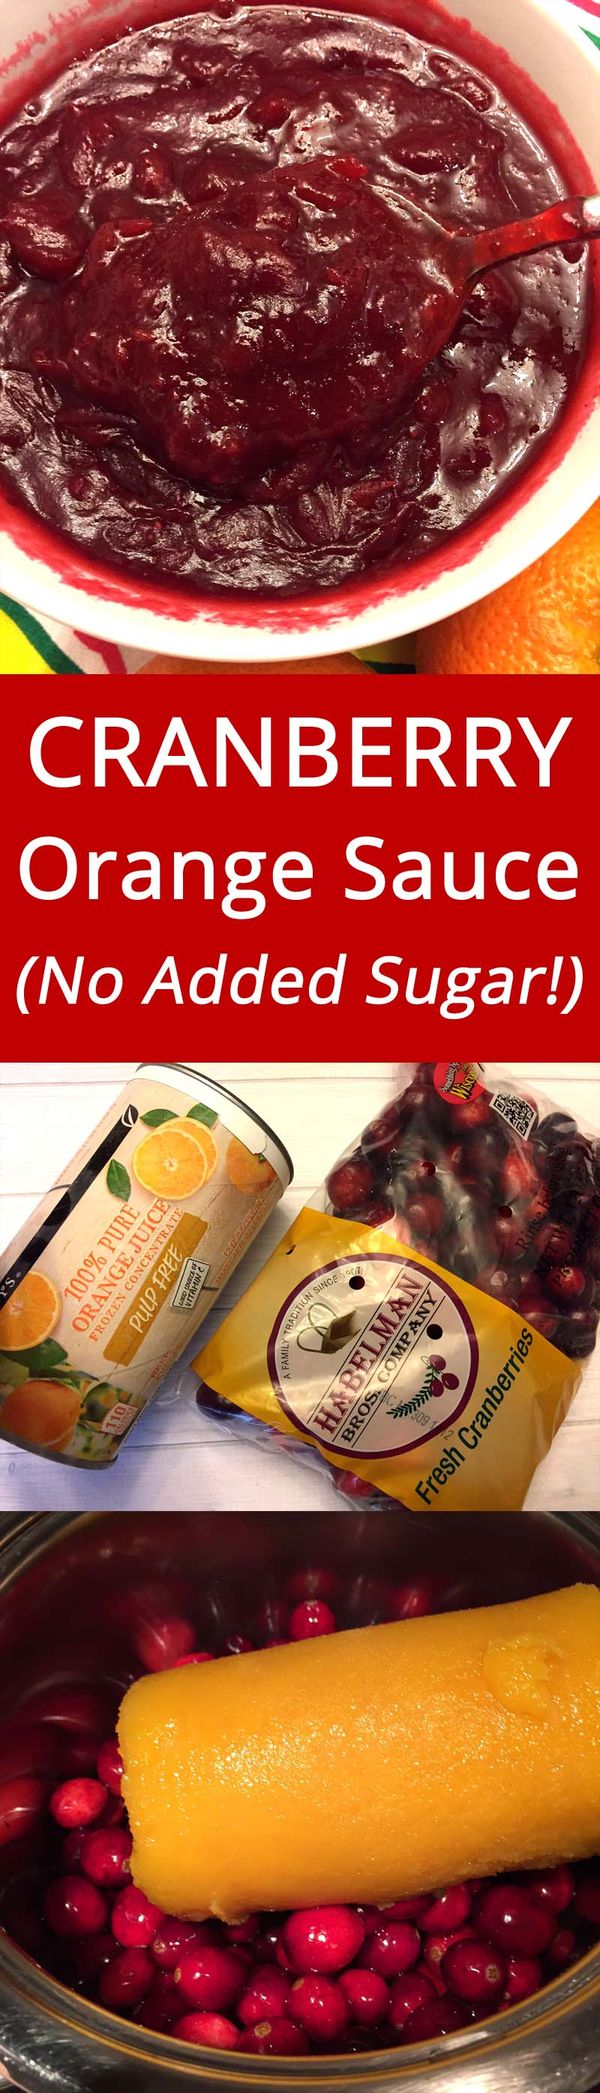 Cranberry Orange Sauce With No Added Sugar